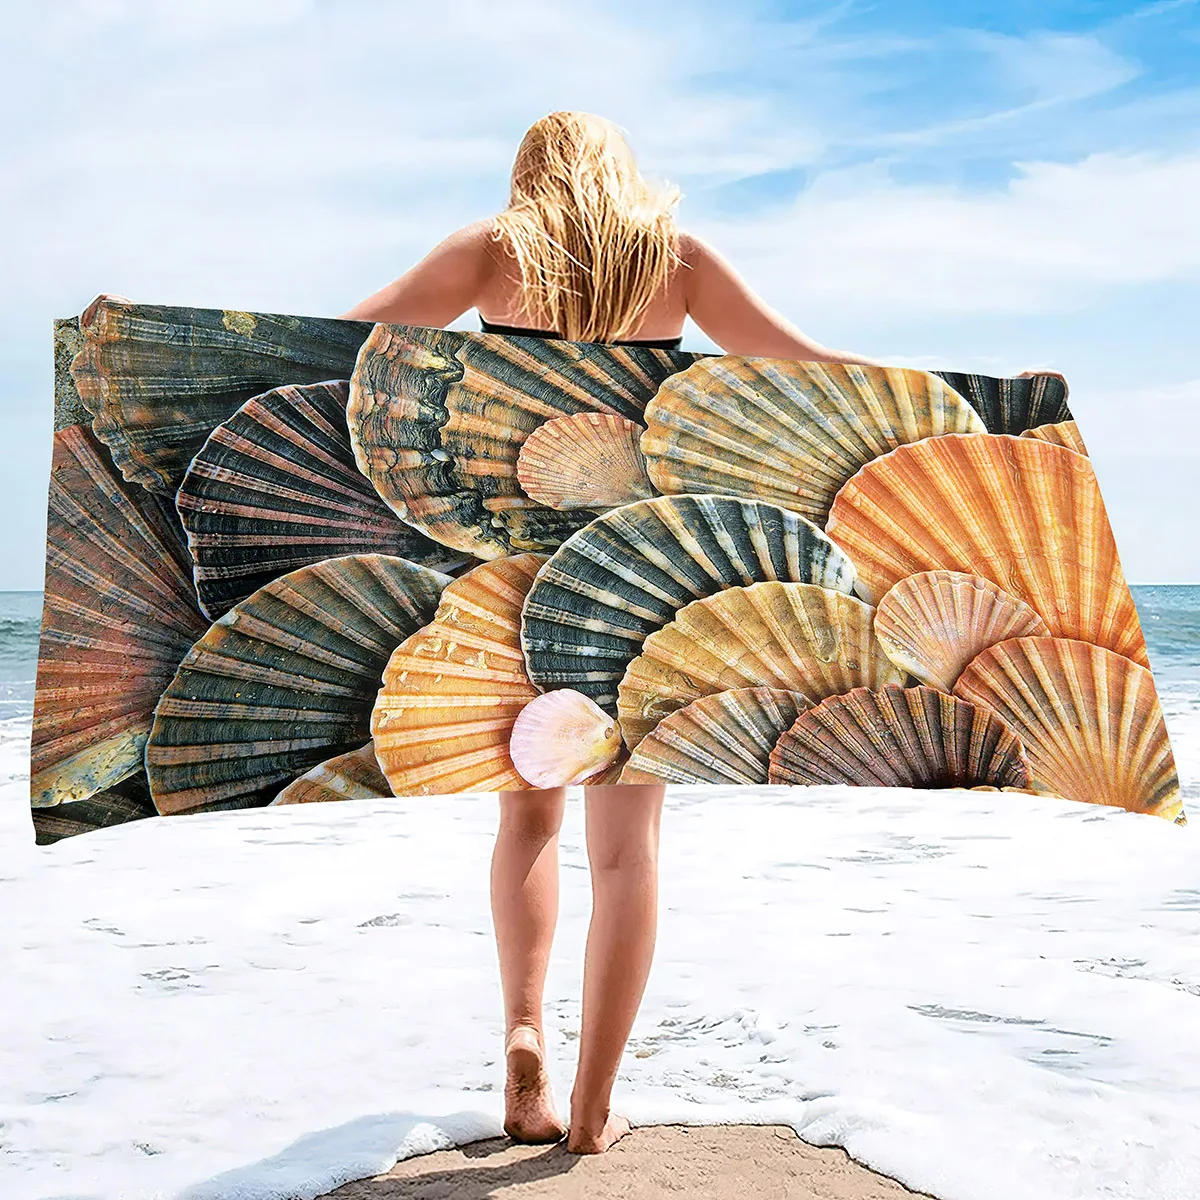 

Beach Seashell Starfish Towel Summer Bathroom Soft Absorbent Multipurpose Quick Dry Sand Free